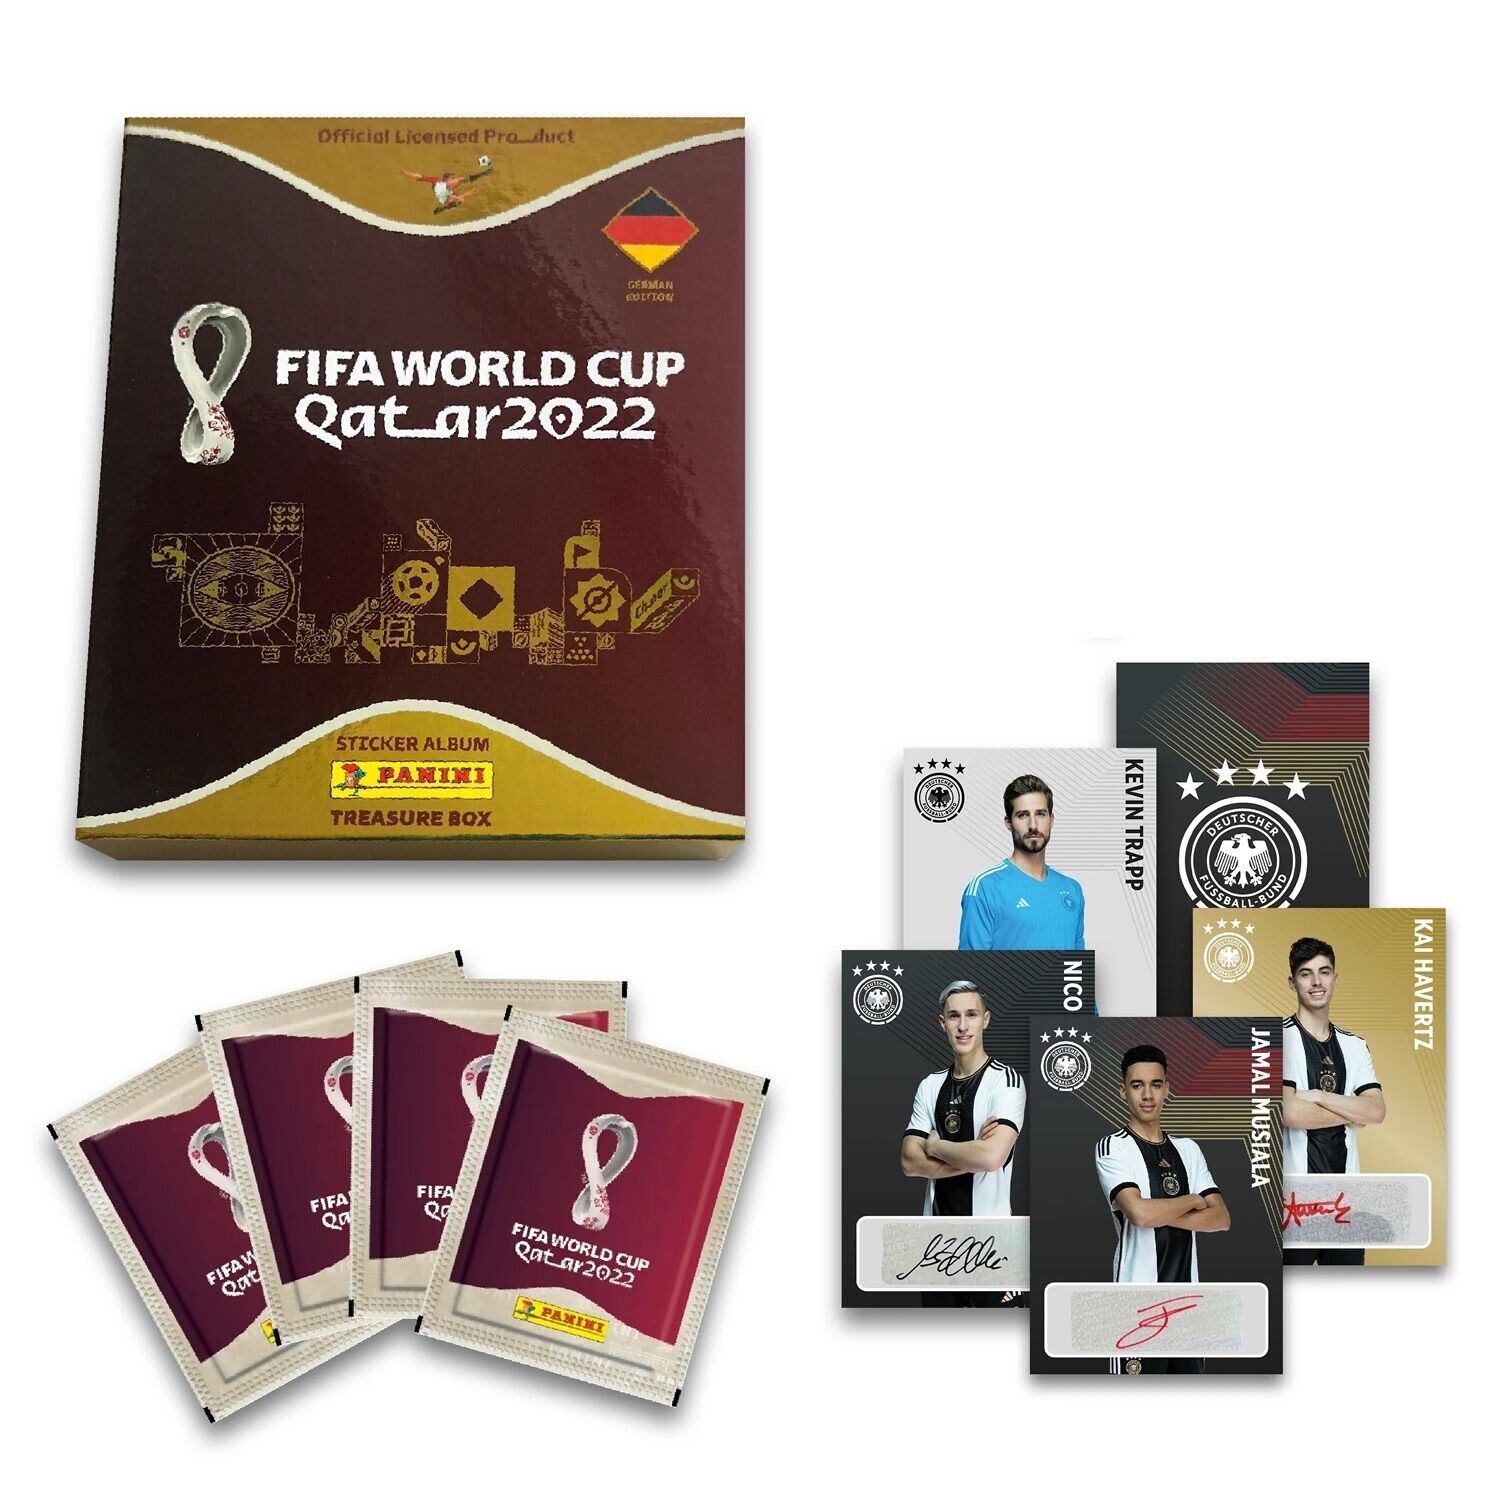 Panini World Cup Sticker Monocouvette Limited 100 Sticker Packs Card Qatar